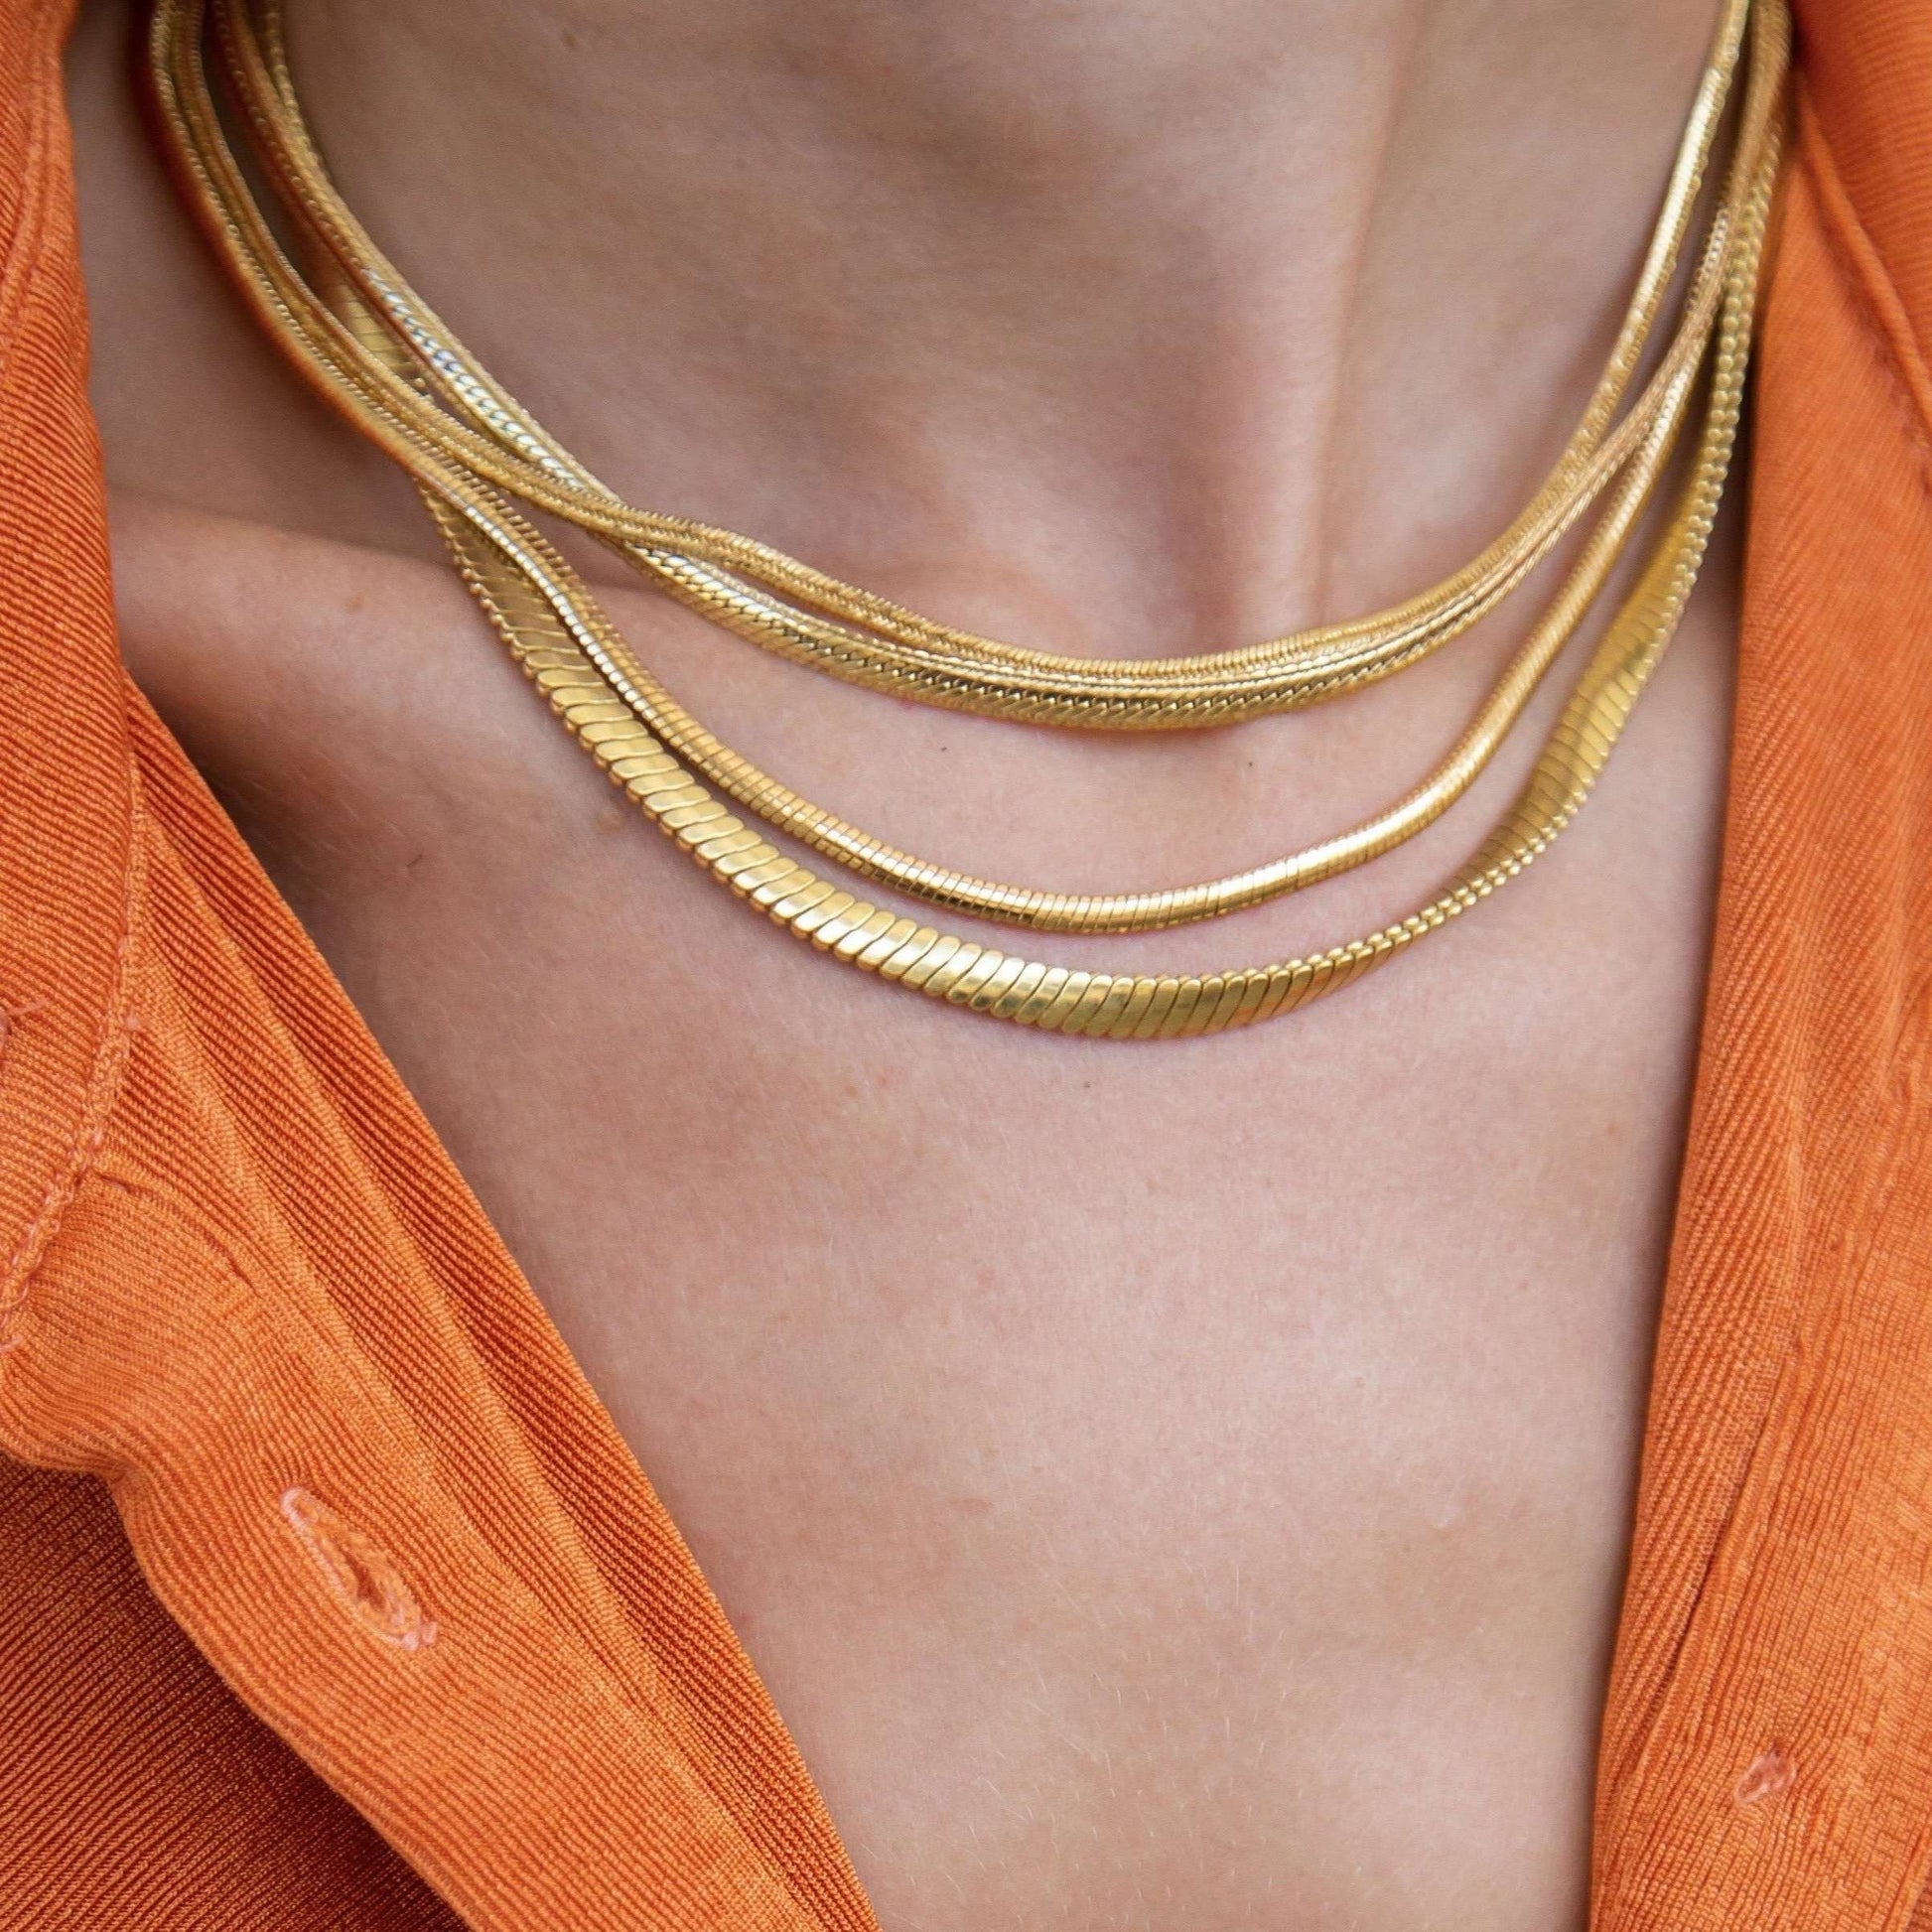 Jonesy Wood:Necklace:Blake Herringbone Chain Necklace